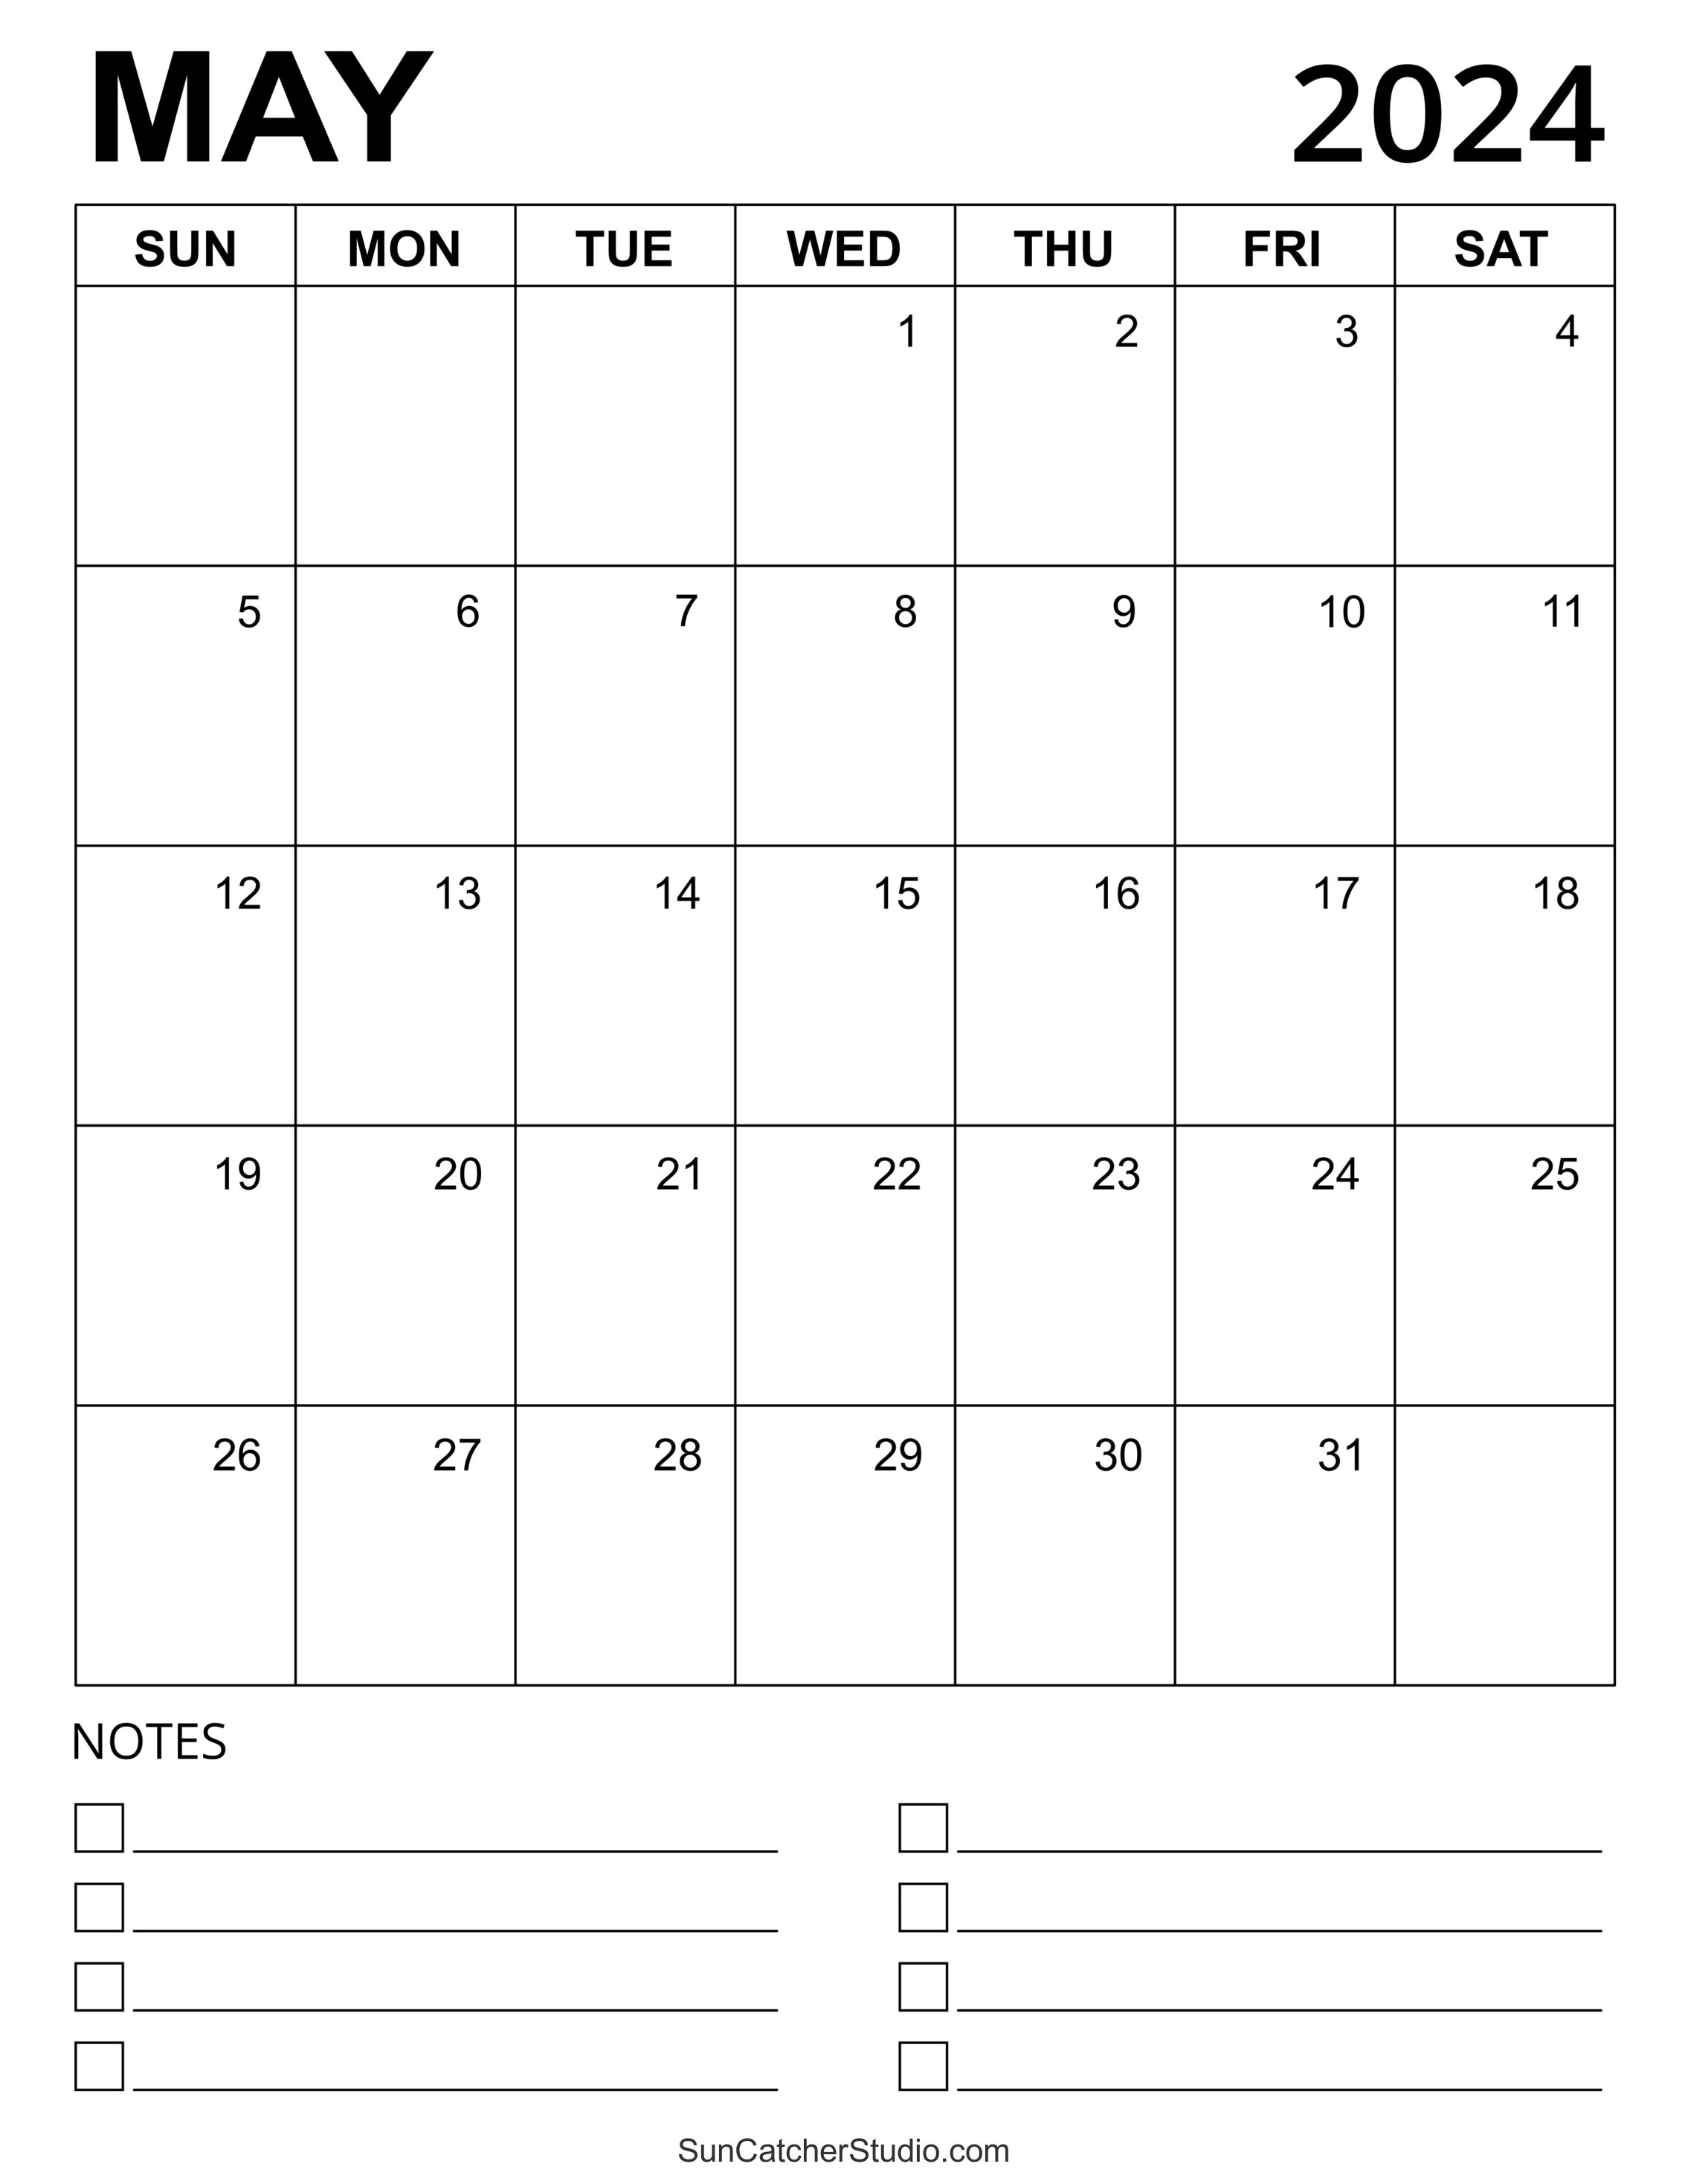 May 2024 Calendar (Free Printable) DIY Projects, Patterns, Monograms